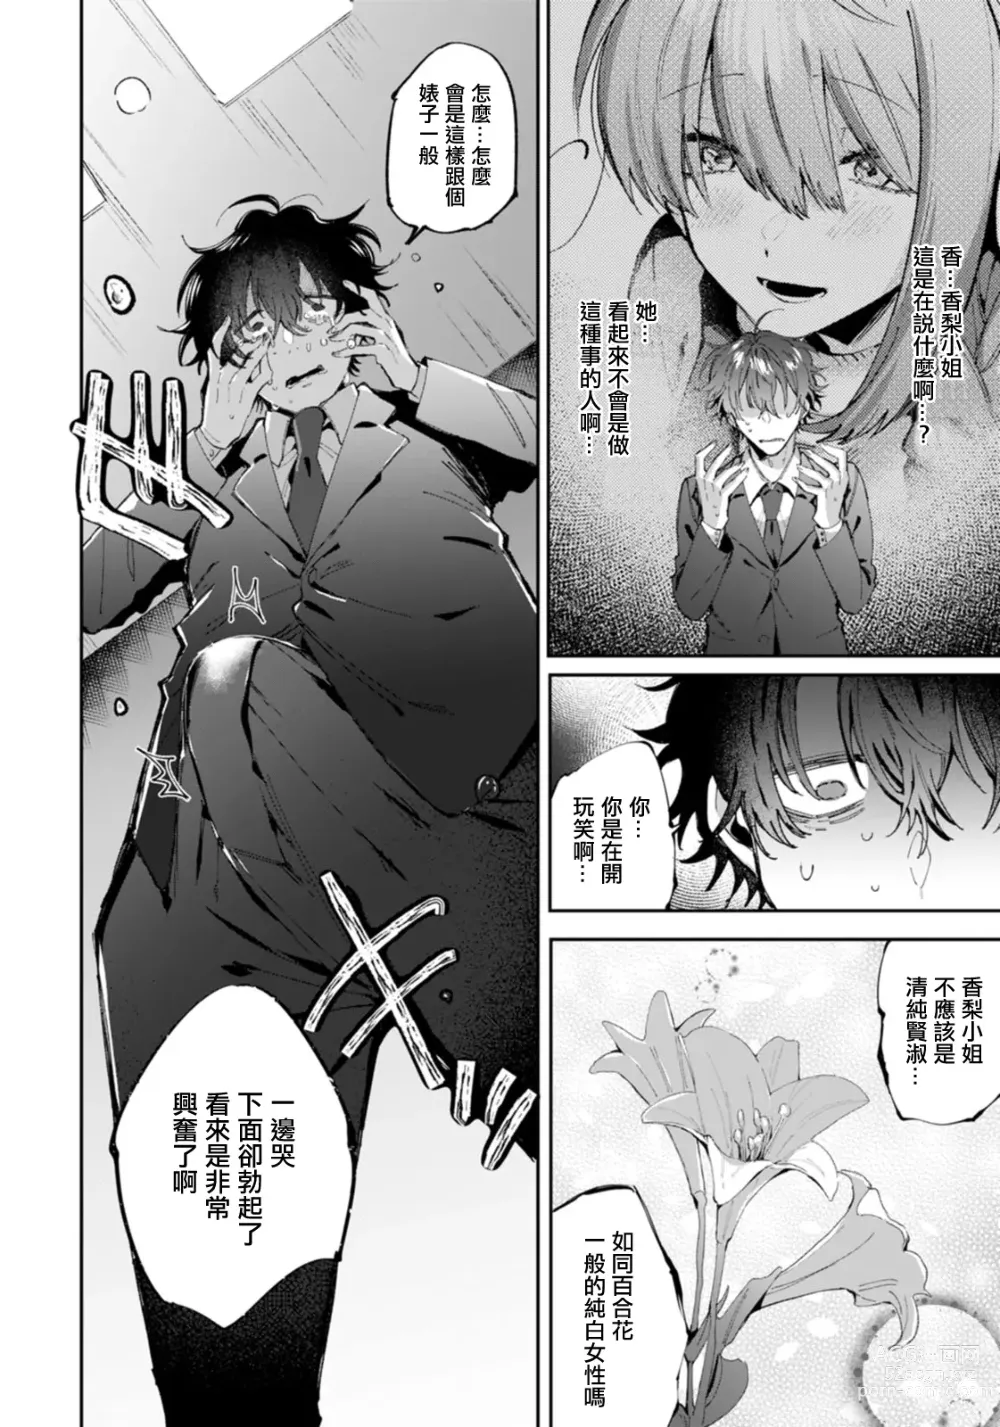 Page 4 of manga Kimi dake no Hana